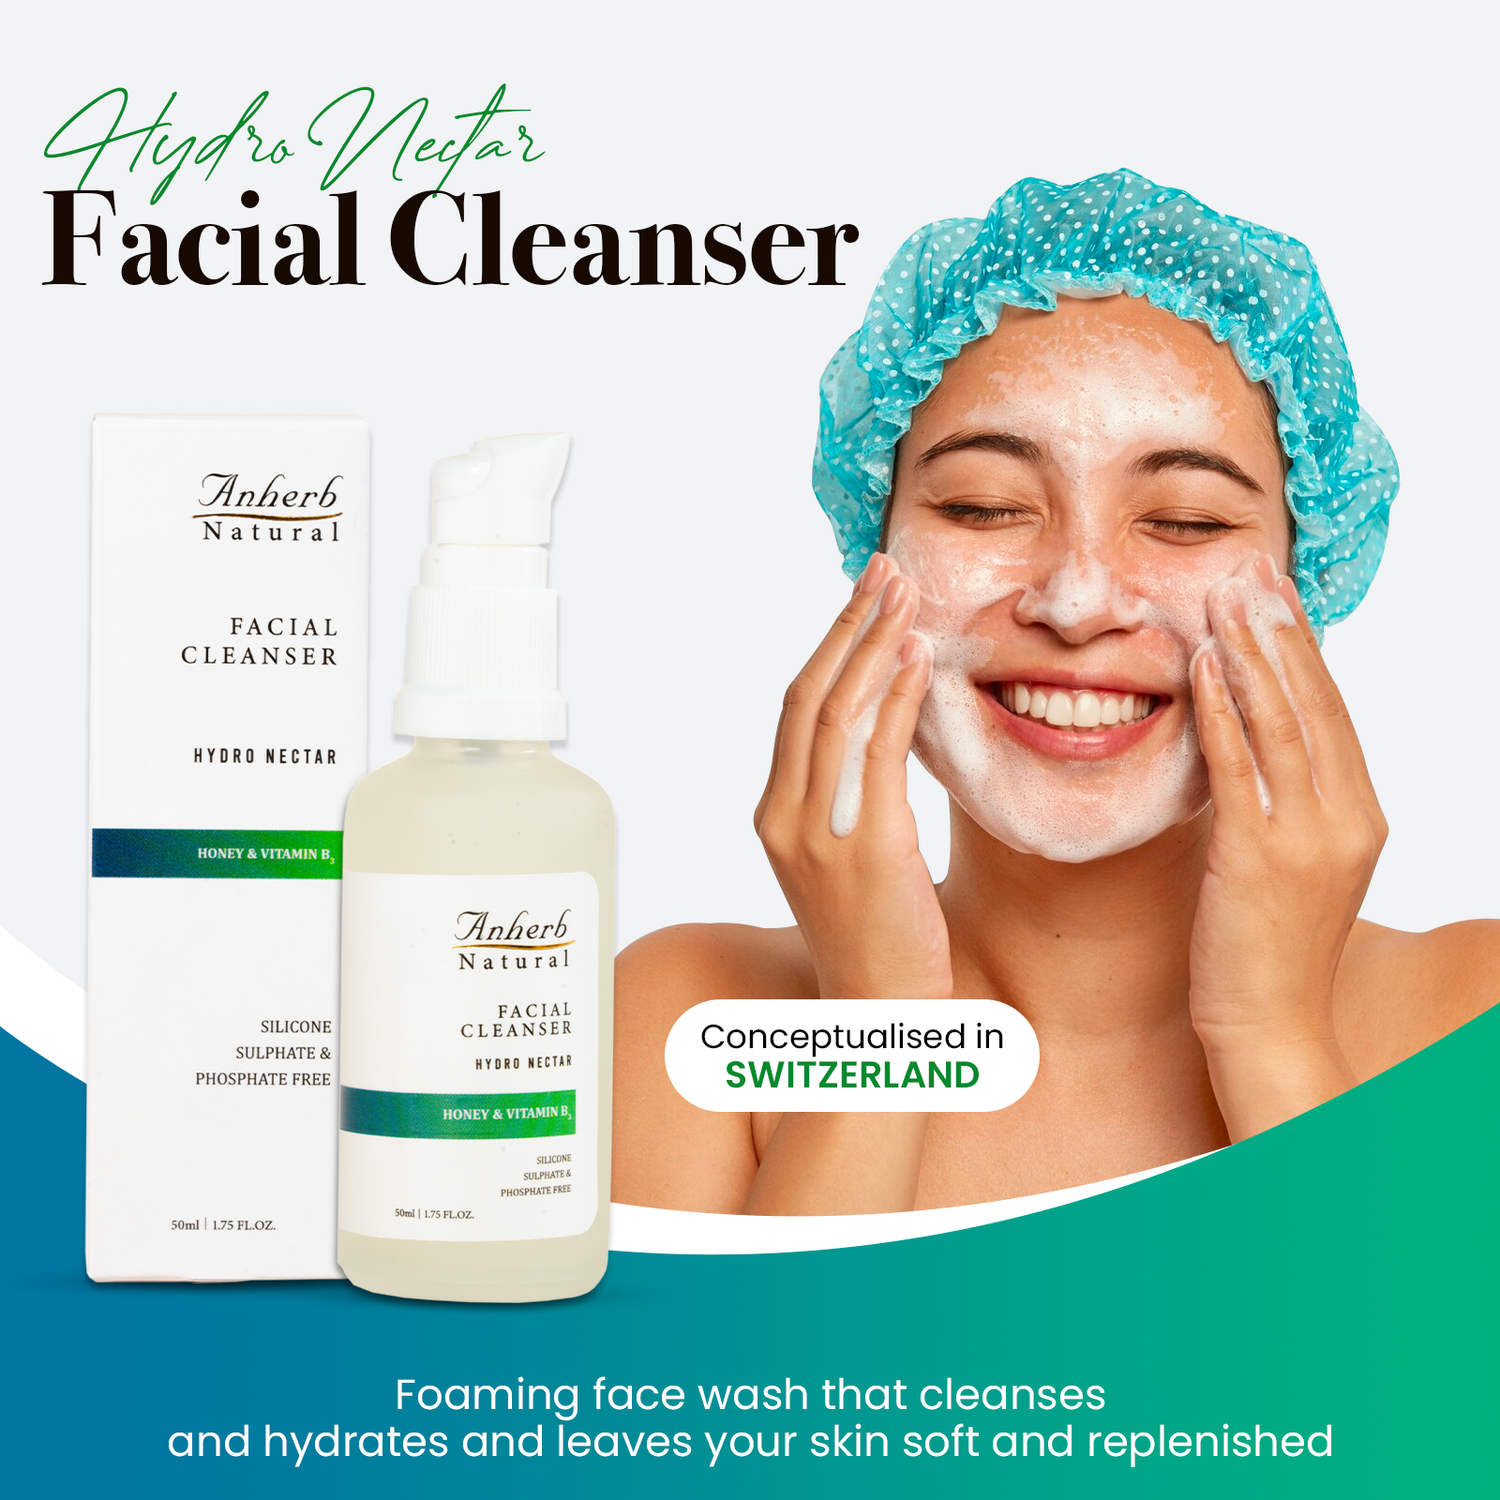 Hydro Nectar Facial Cleanser